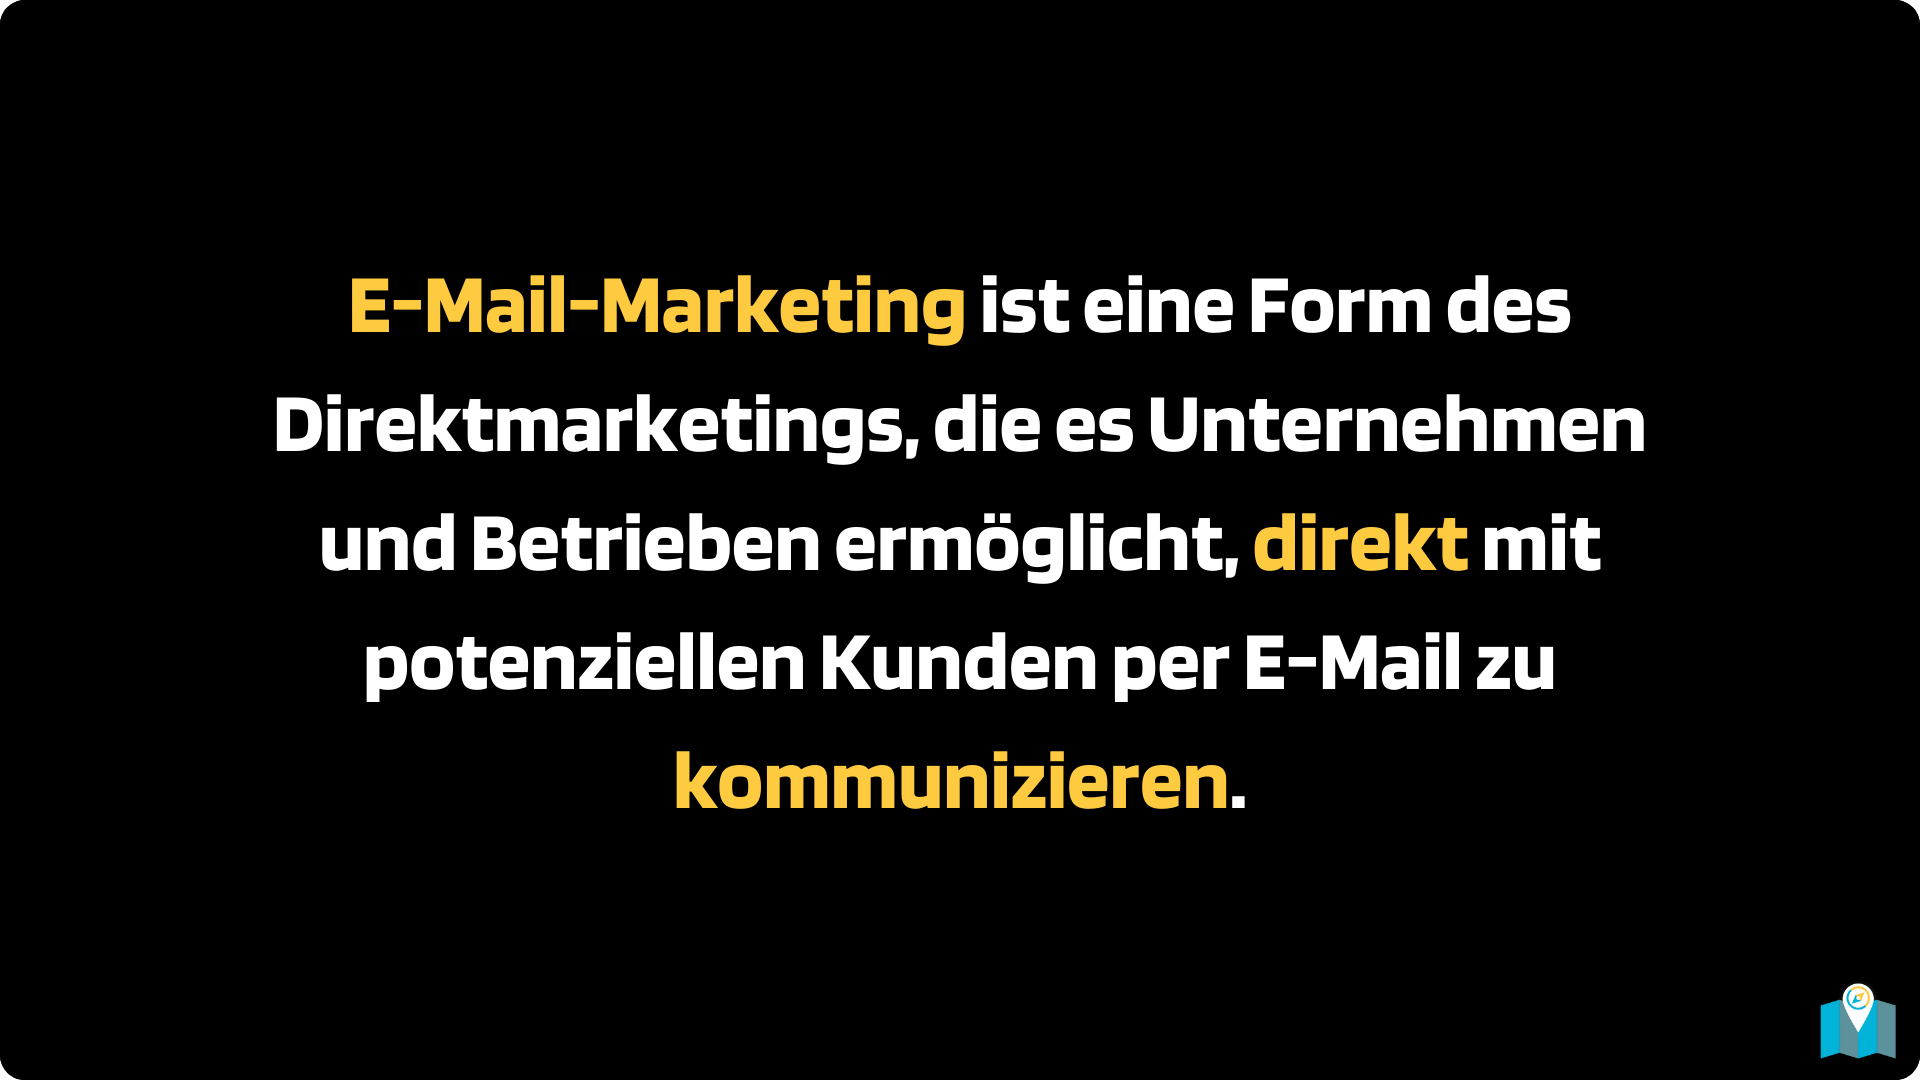 Definition E-Mail-Marketing